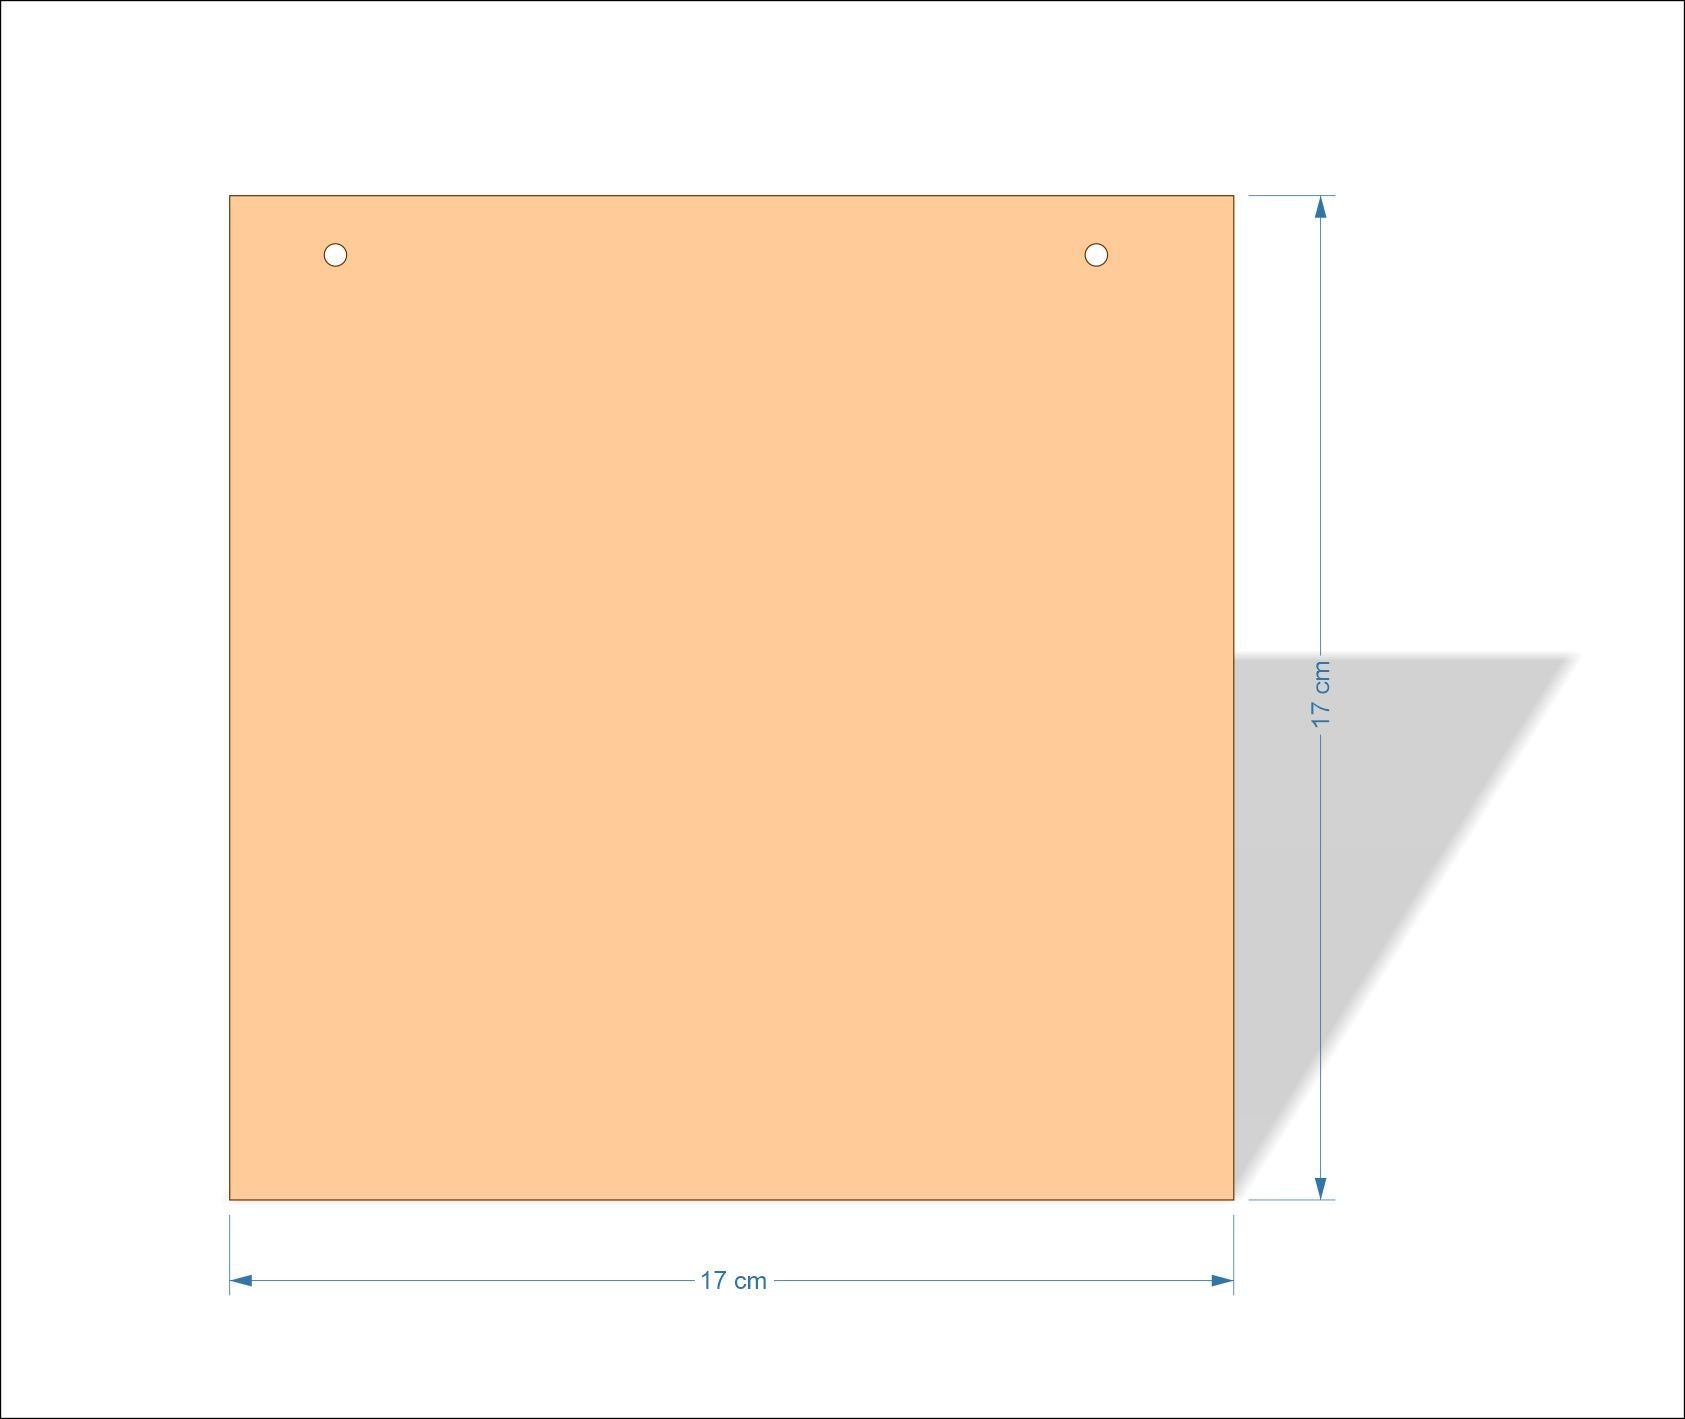 17 cm X 17 cm 3mm MDF Plaques with square corners